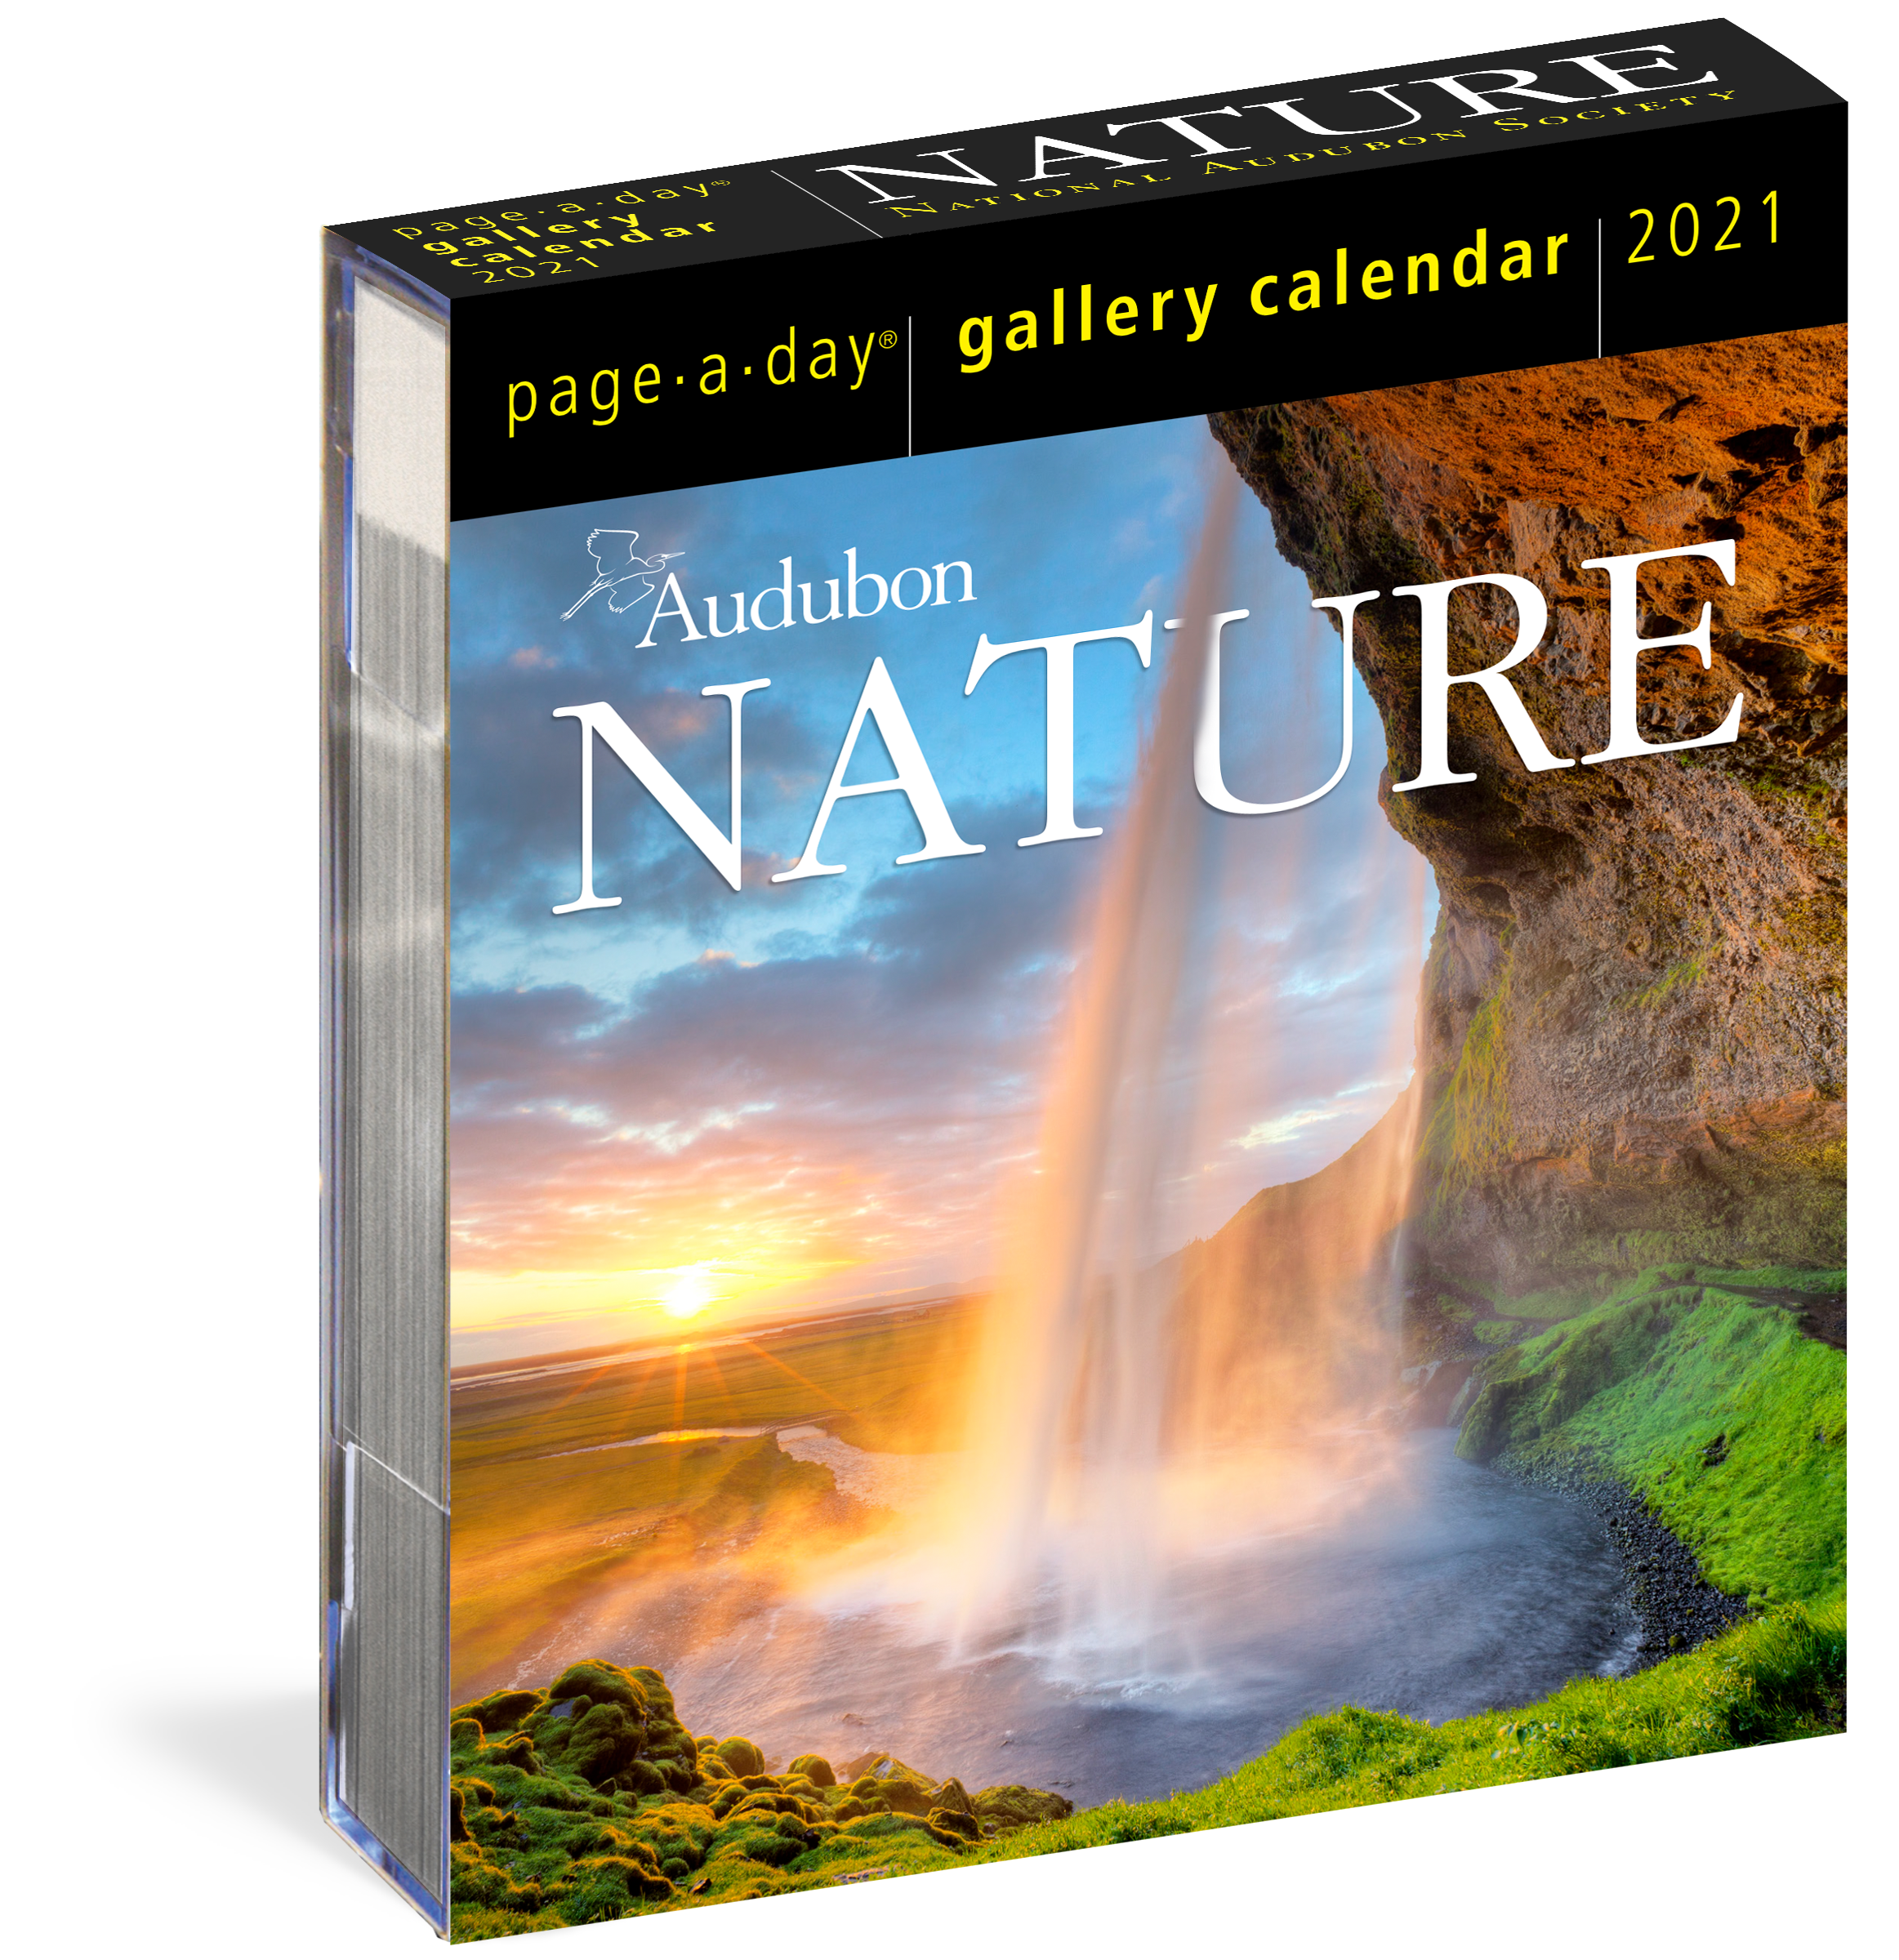 audubon calendar 2021 Audubon Nature Page A Day Gallery Calendar 2021 Workman Publishing audubon calendar 2021